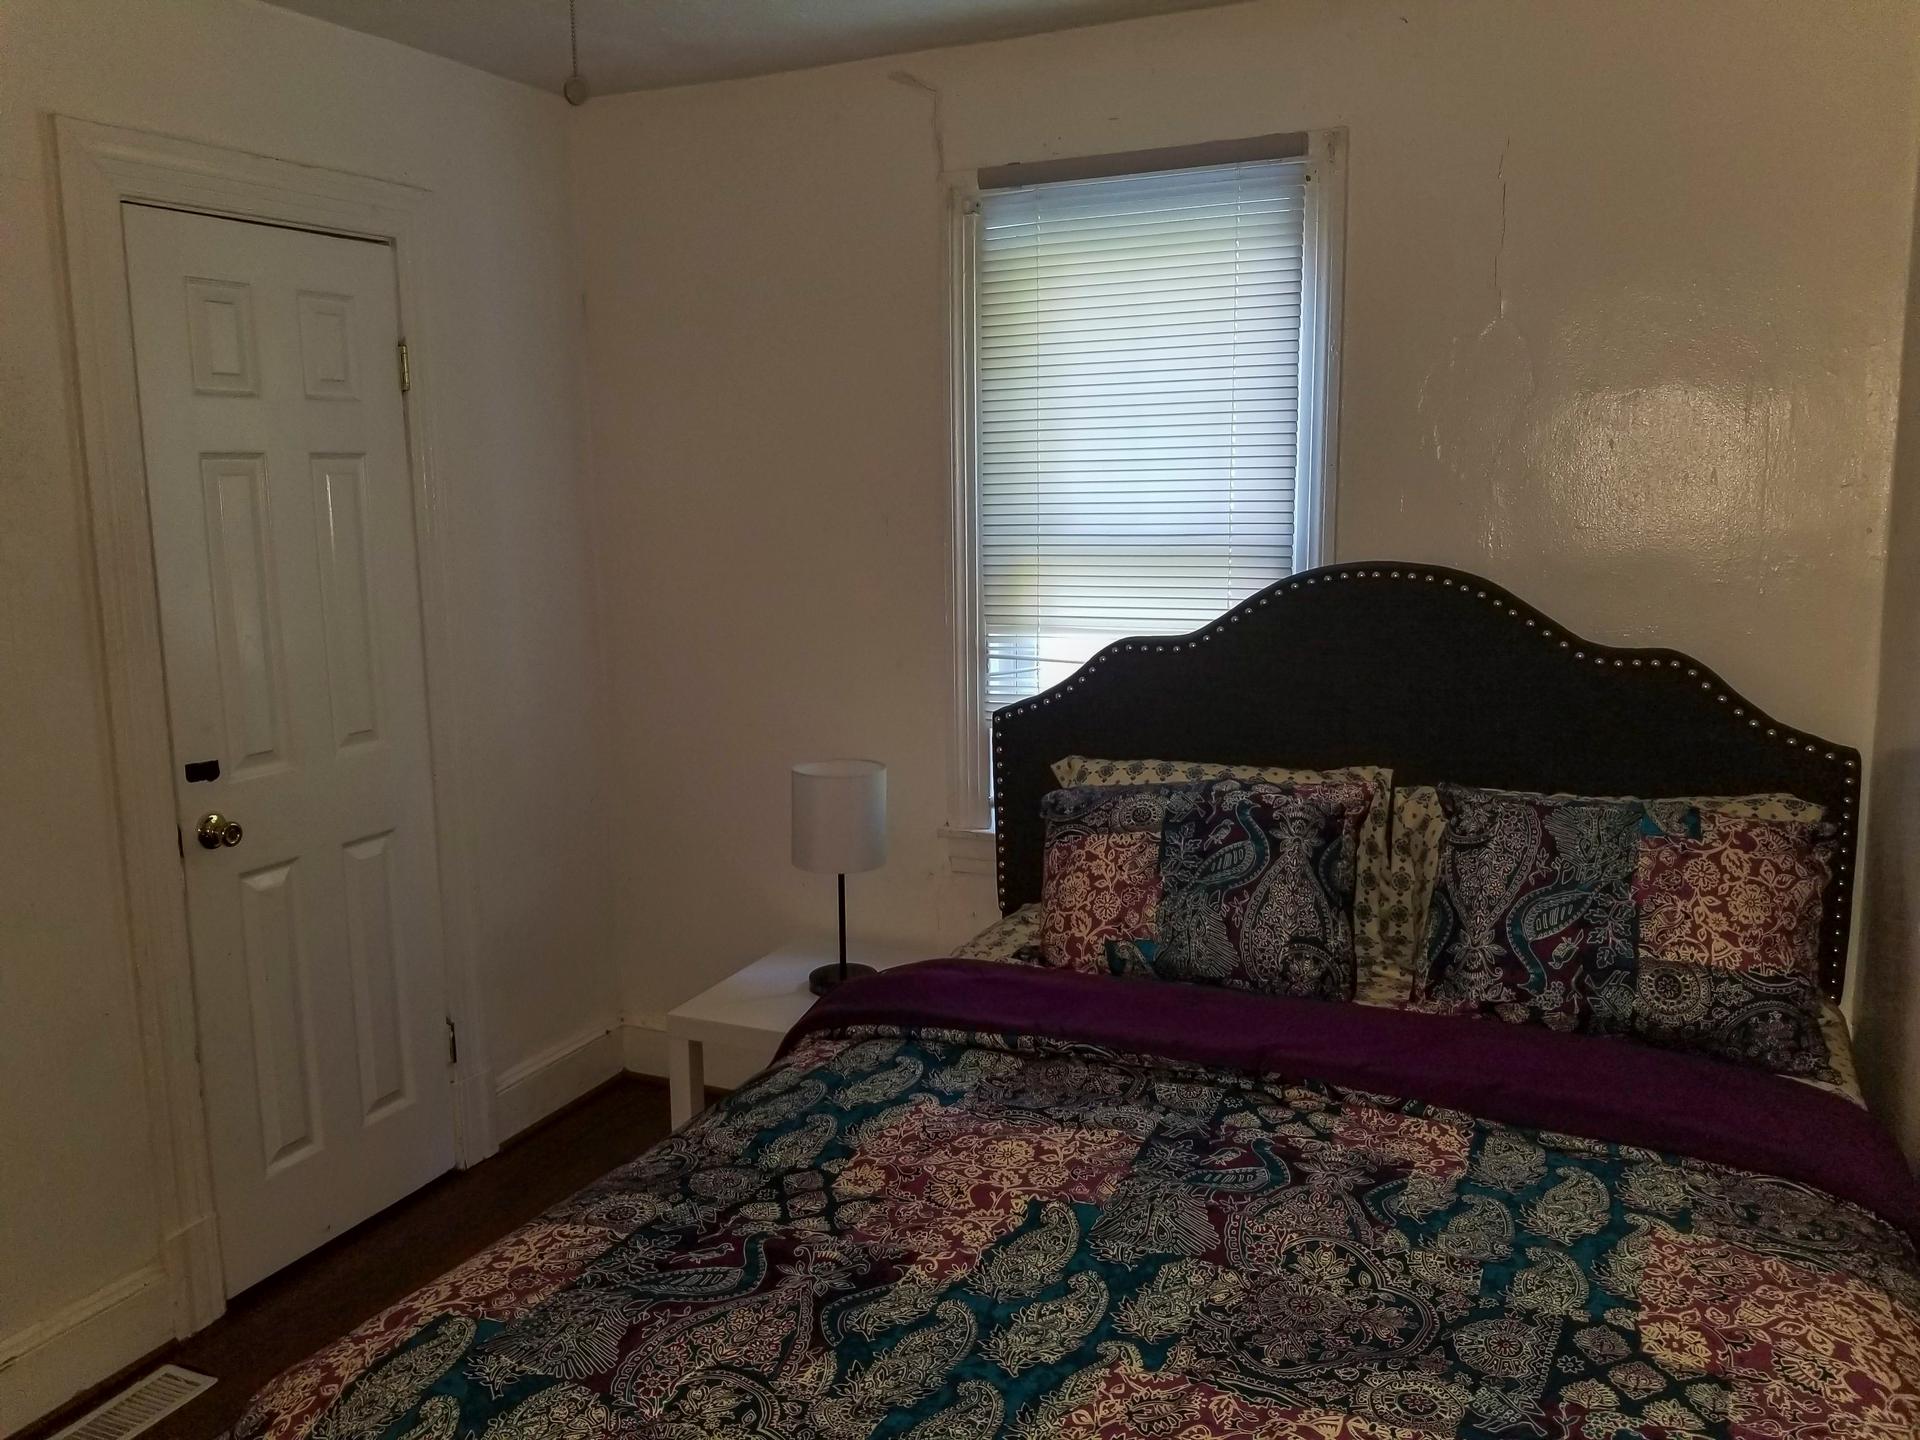 bedroom, detected:window blind, bed, carpet